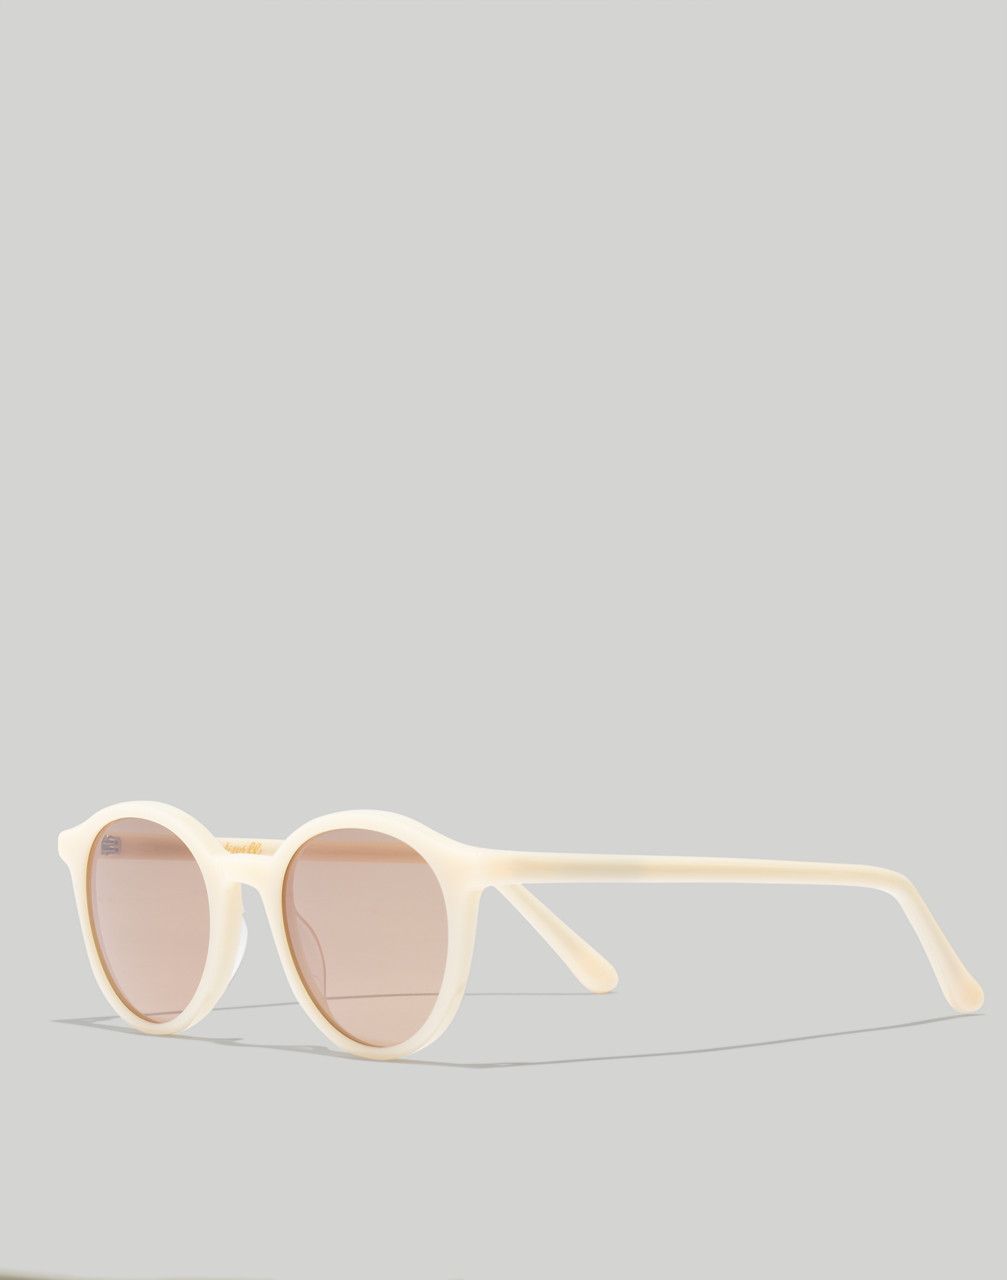 Mw Layton Sunglasses In Sand